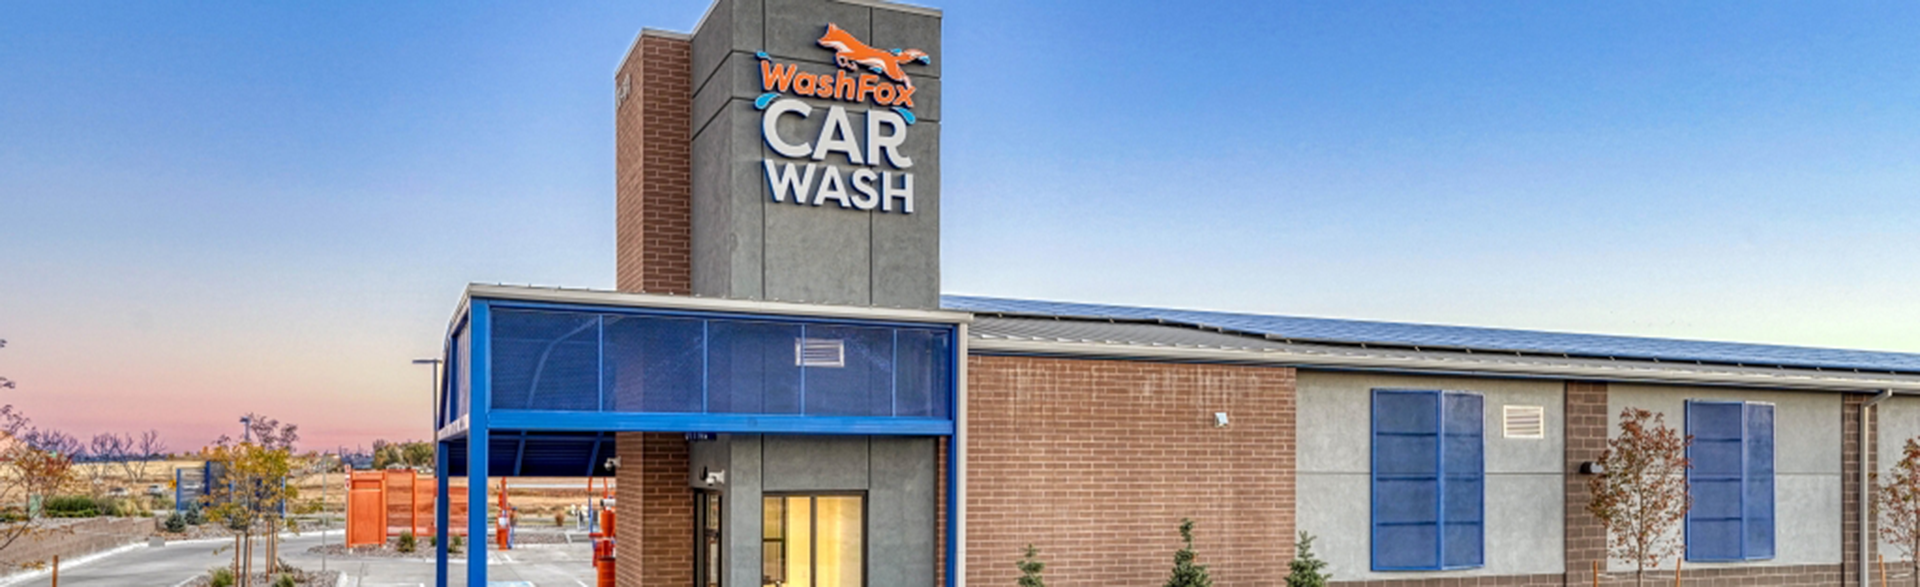 washfox car wash thornton commerce city careers top 02